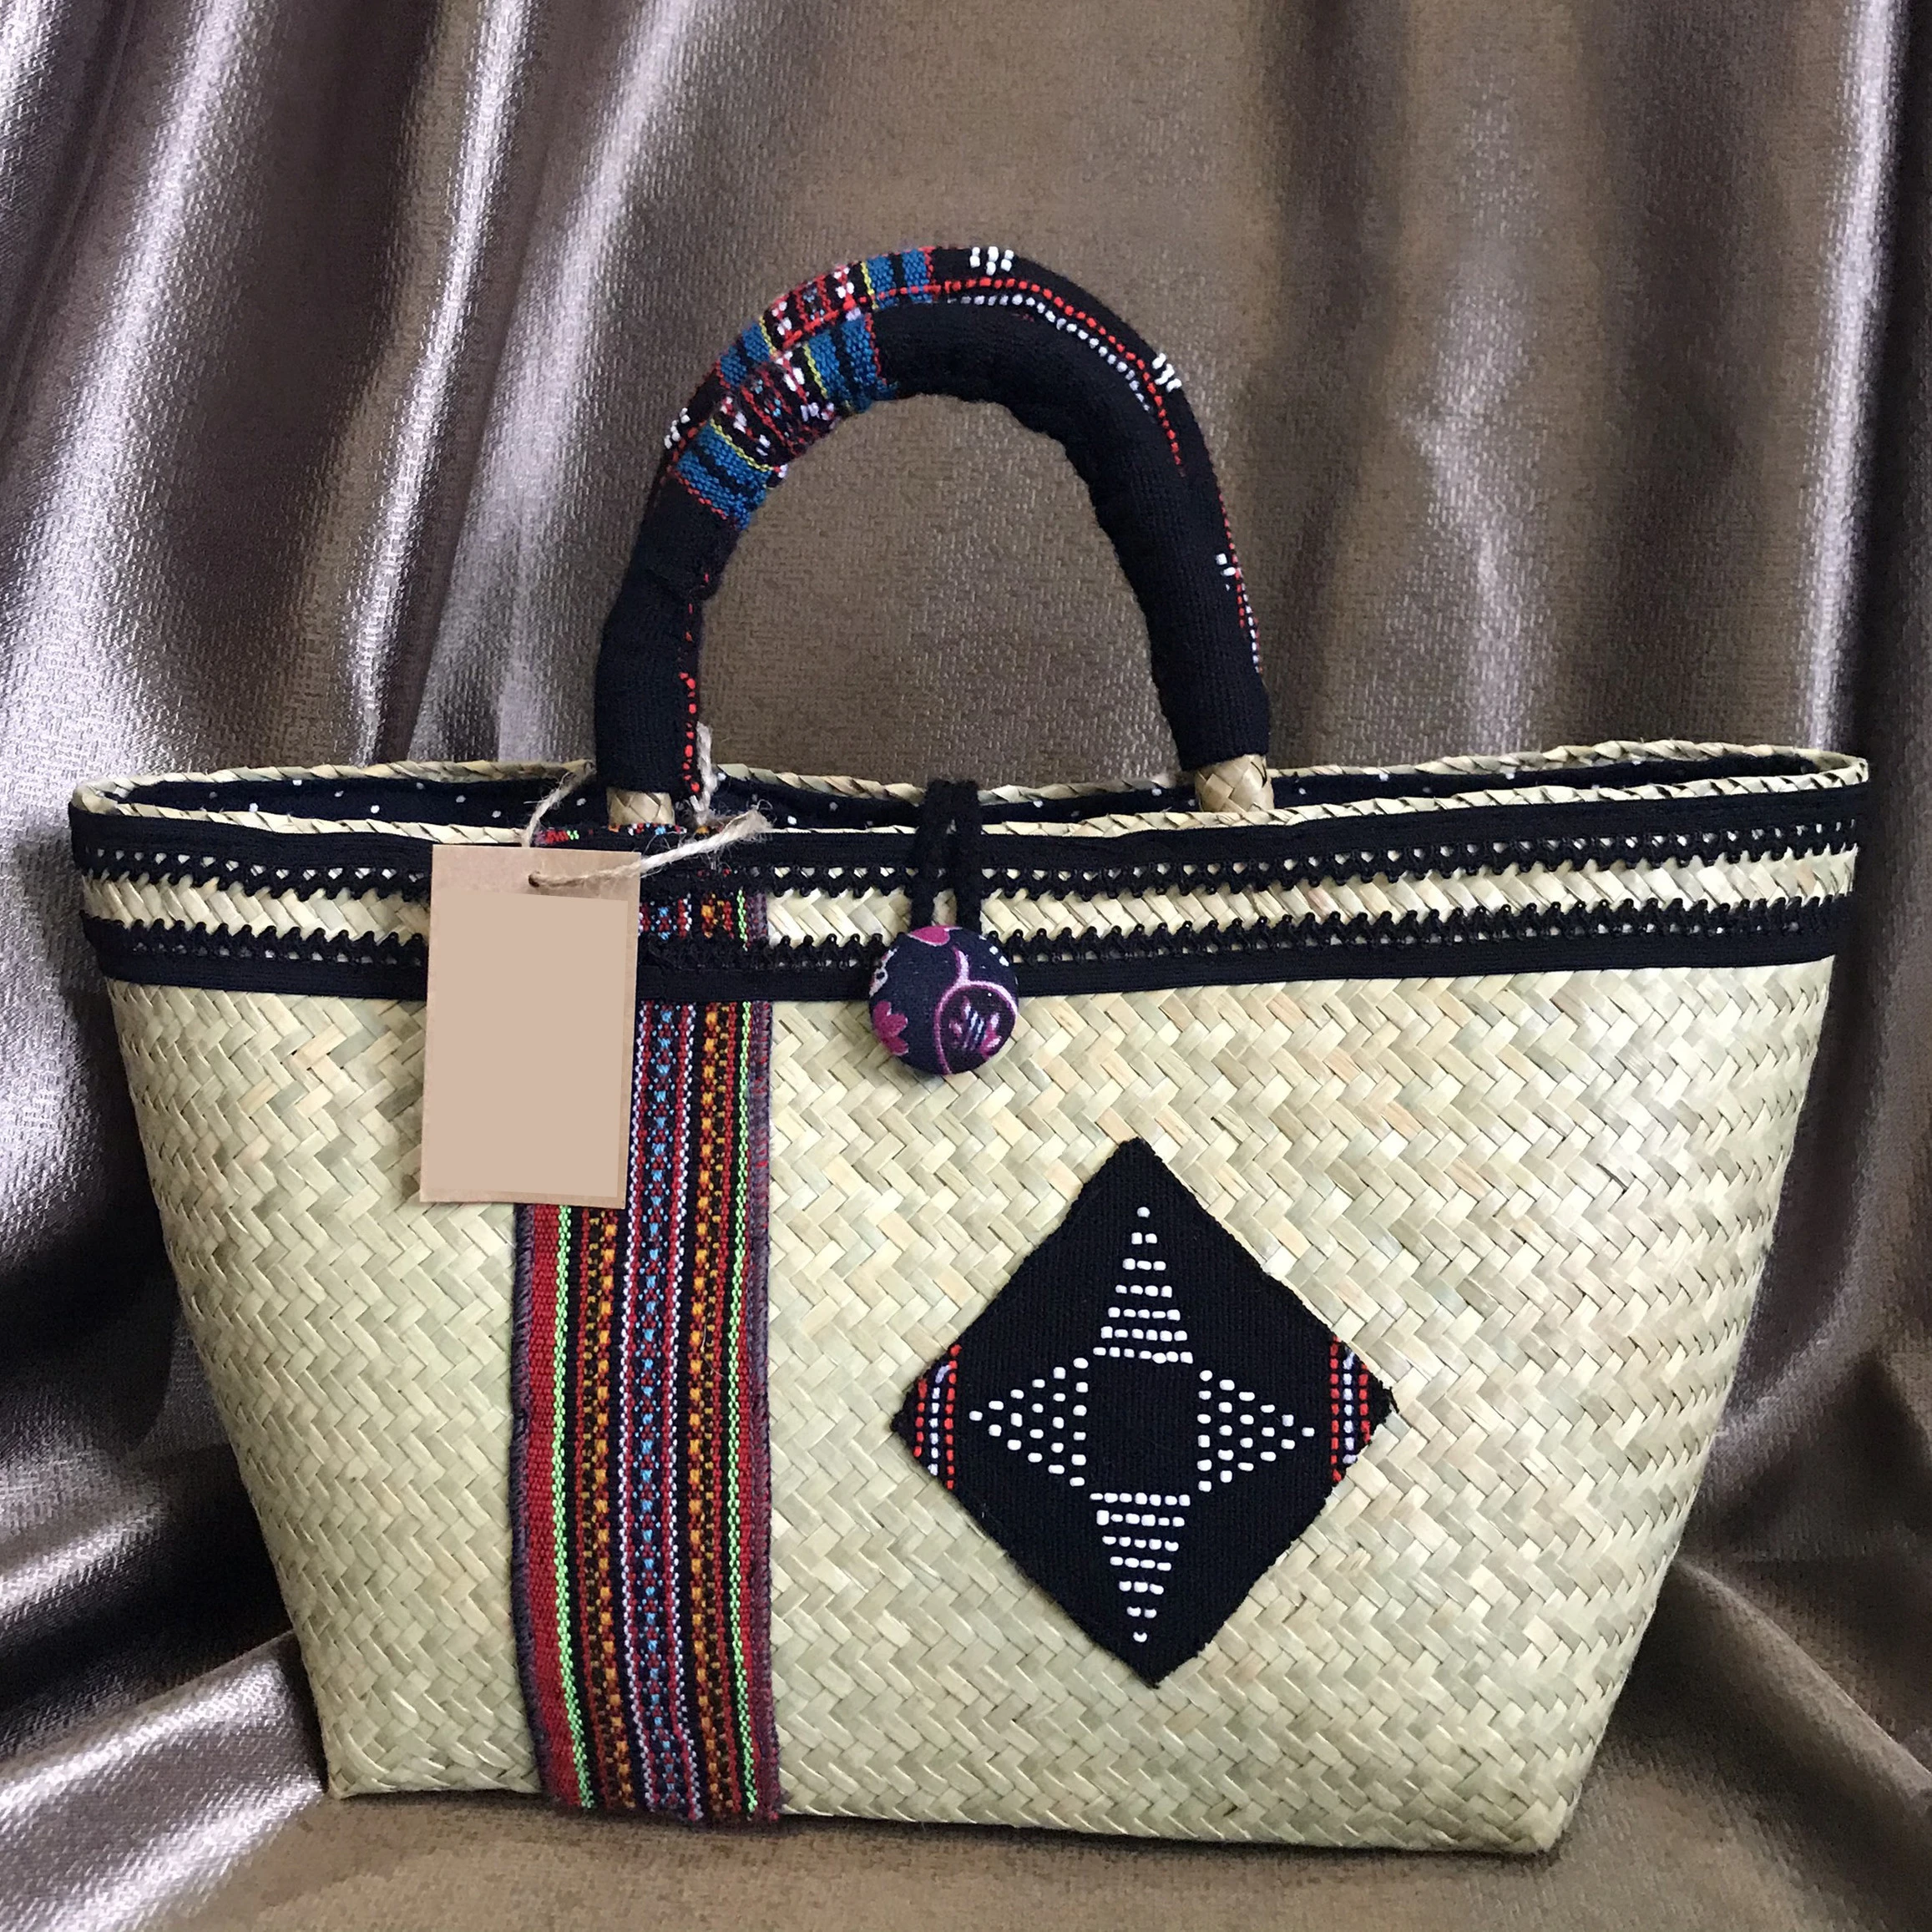 New design sedge handbag on sale 74